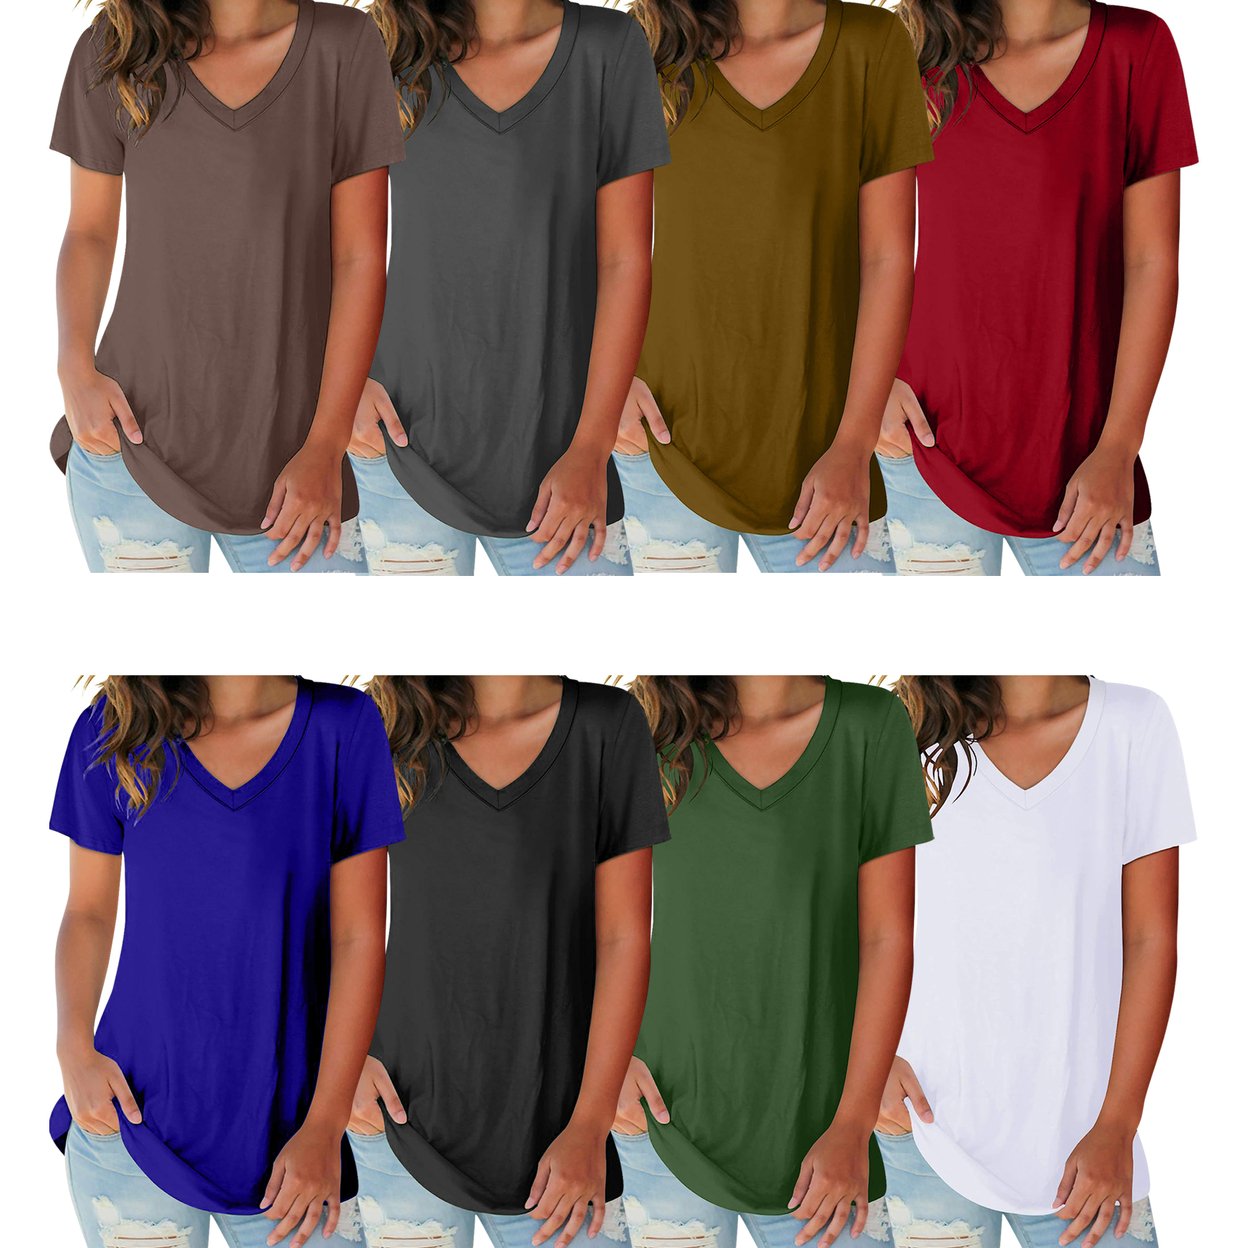 2-Pack: Women's Ultra Soft Smooth Cotton Blend Basic V-Neck Short Sleeve Shirts - White & Mustard, Xx-large